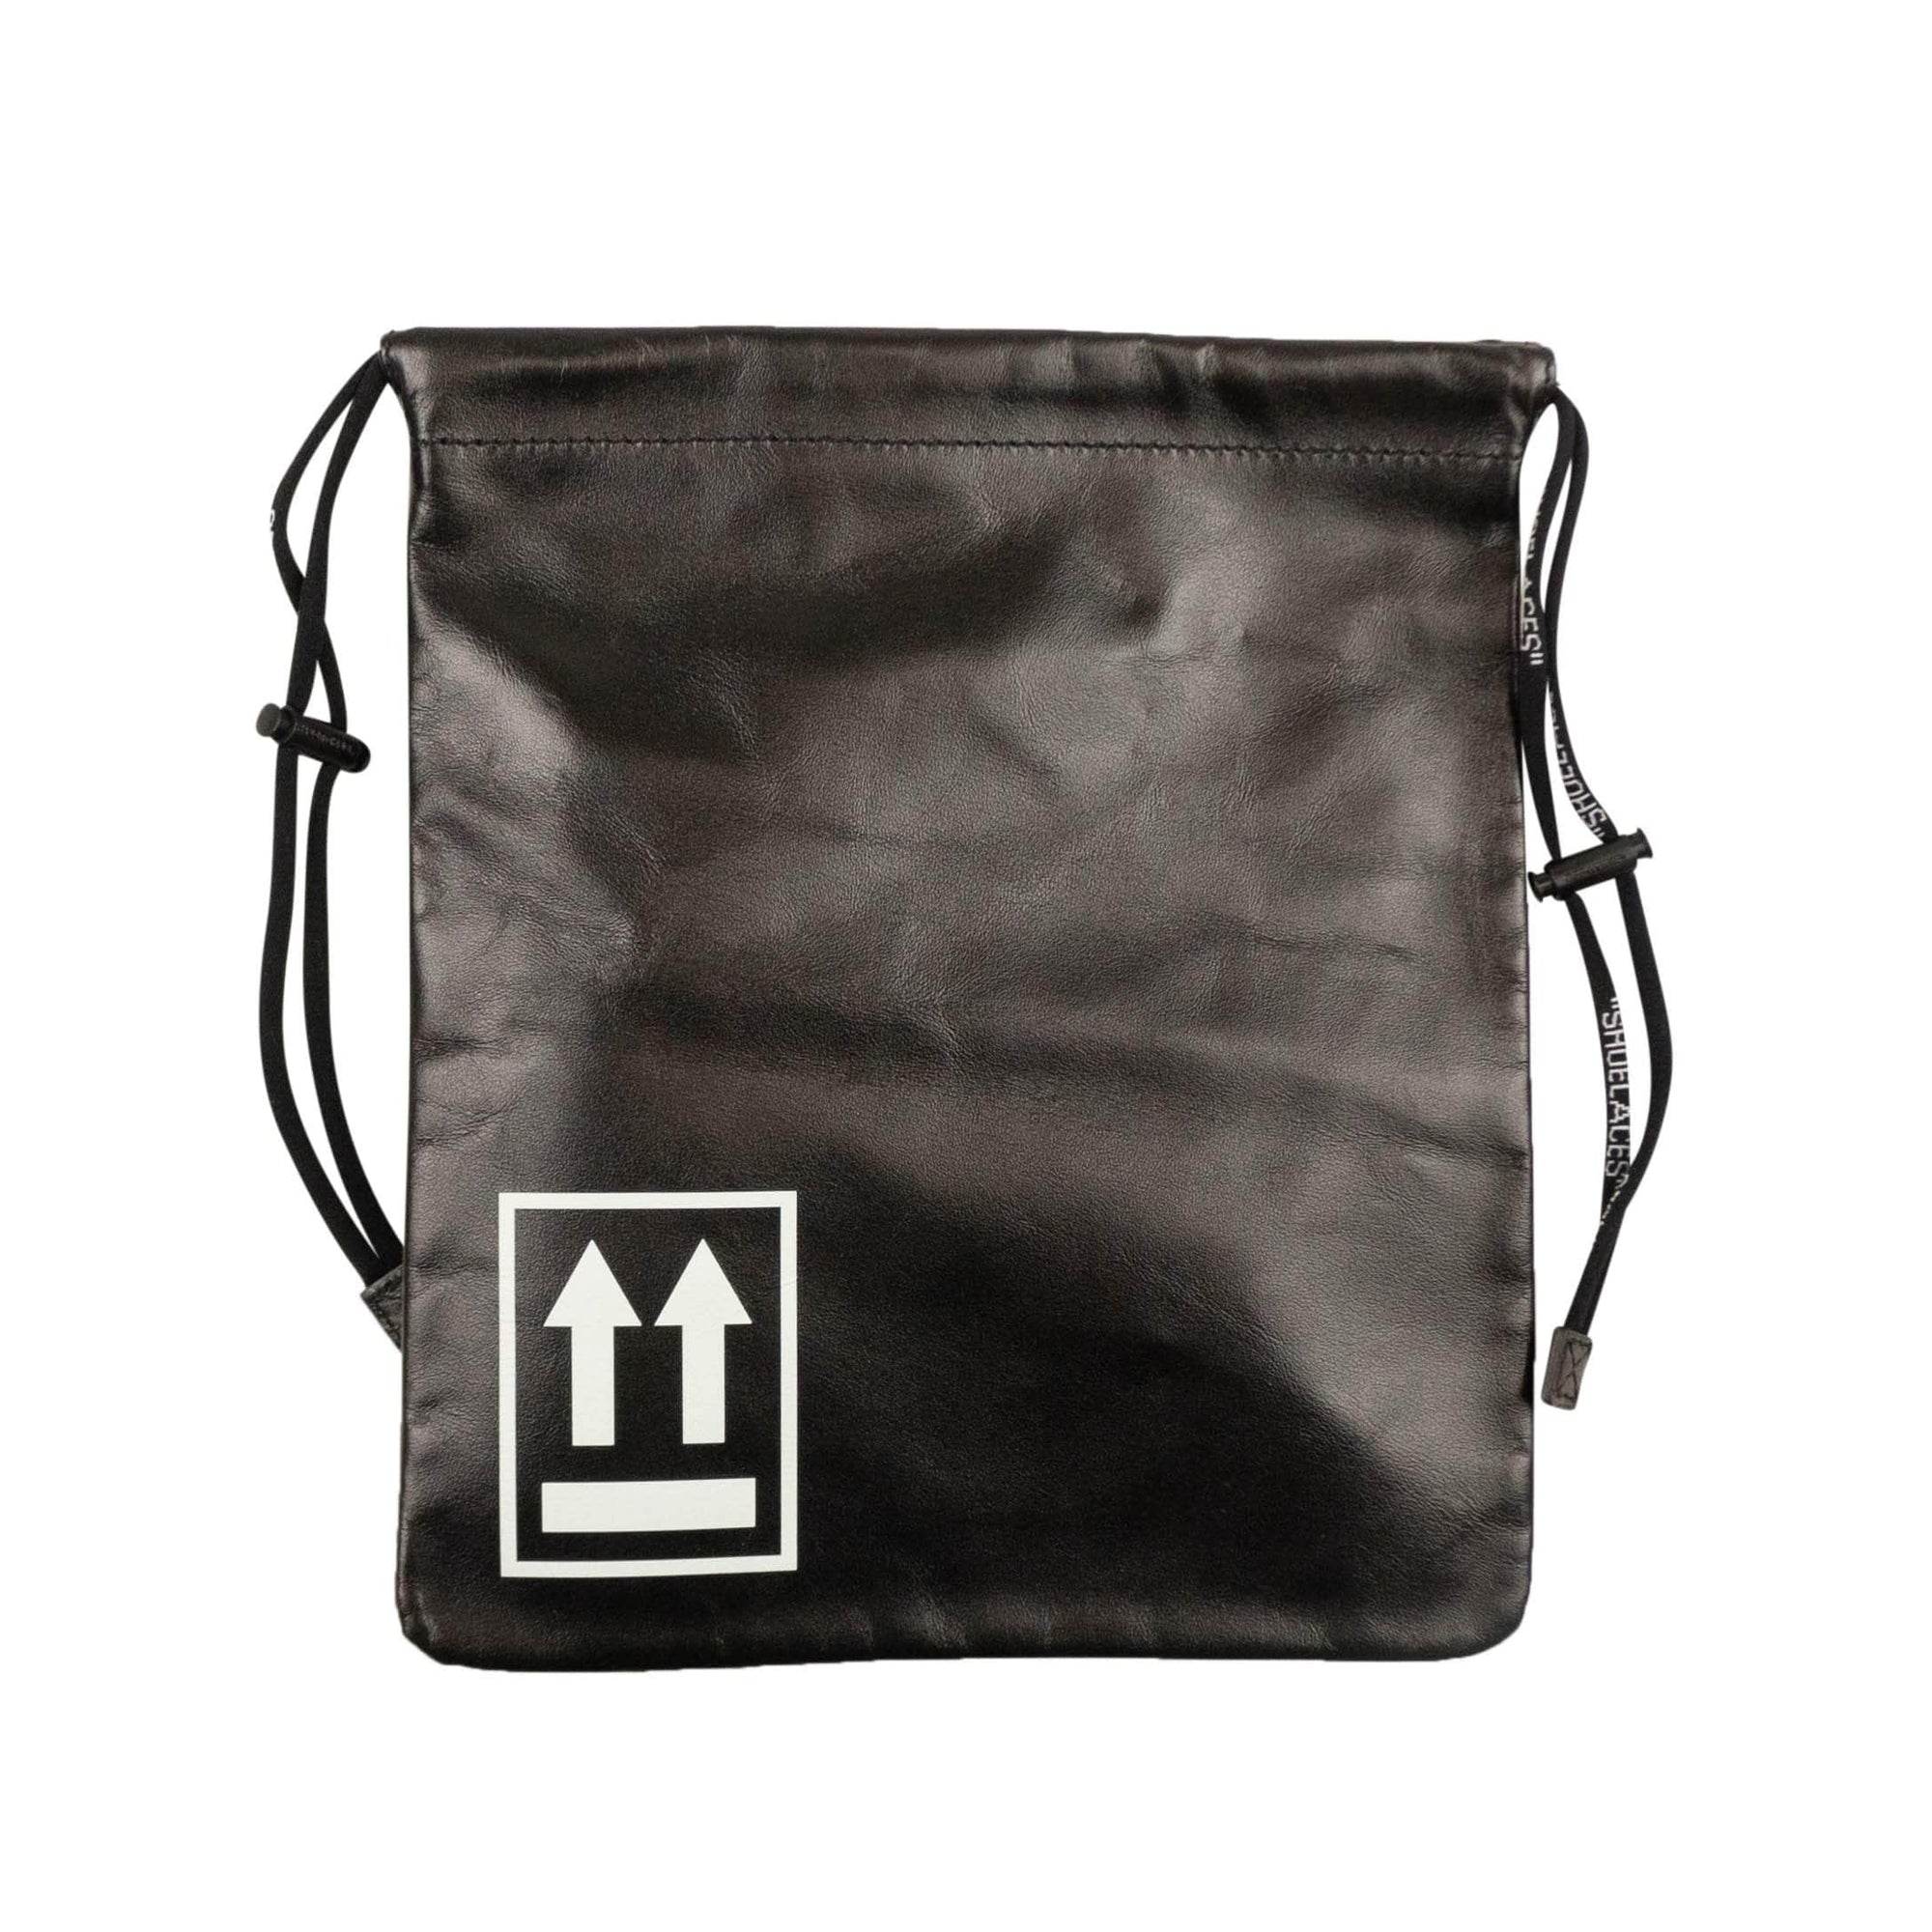 Black Leather Drawstring Bag - GBNY